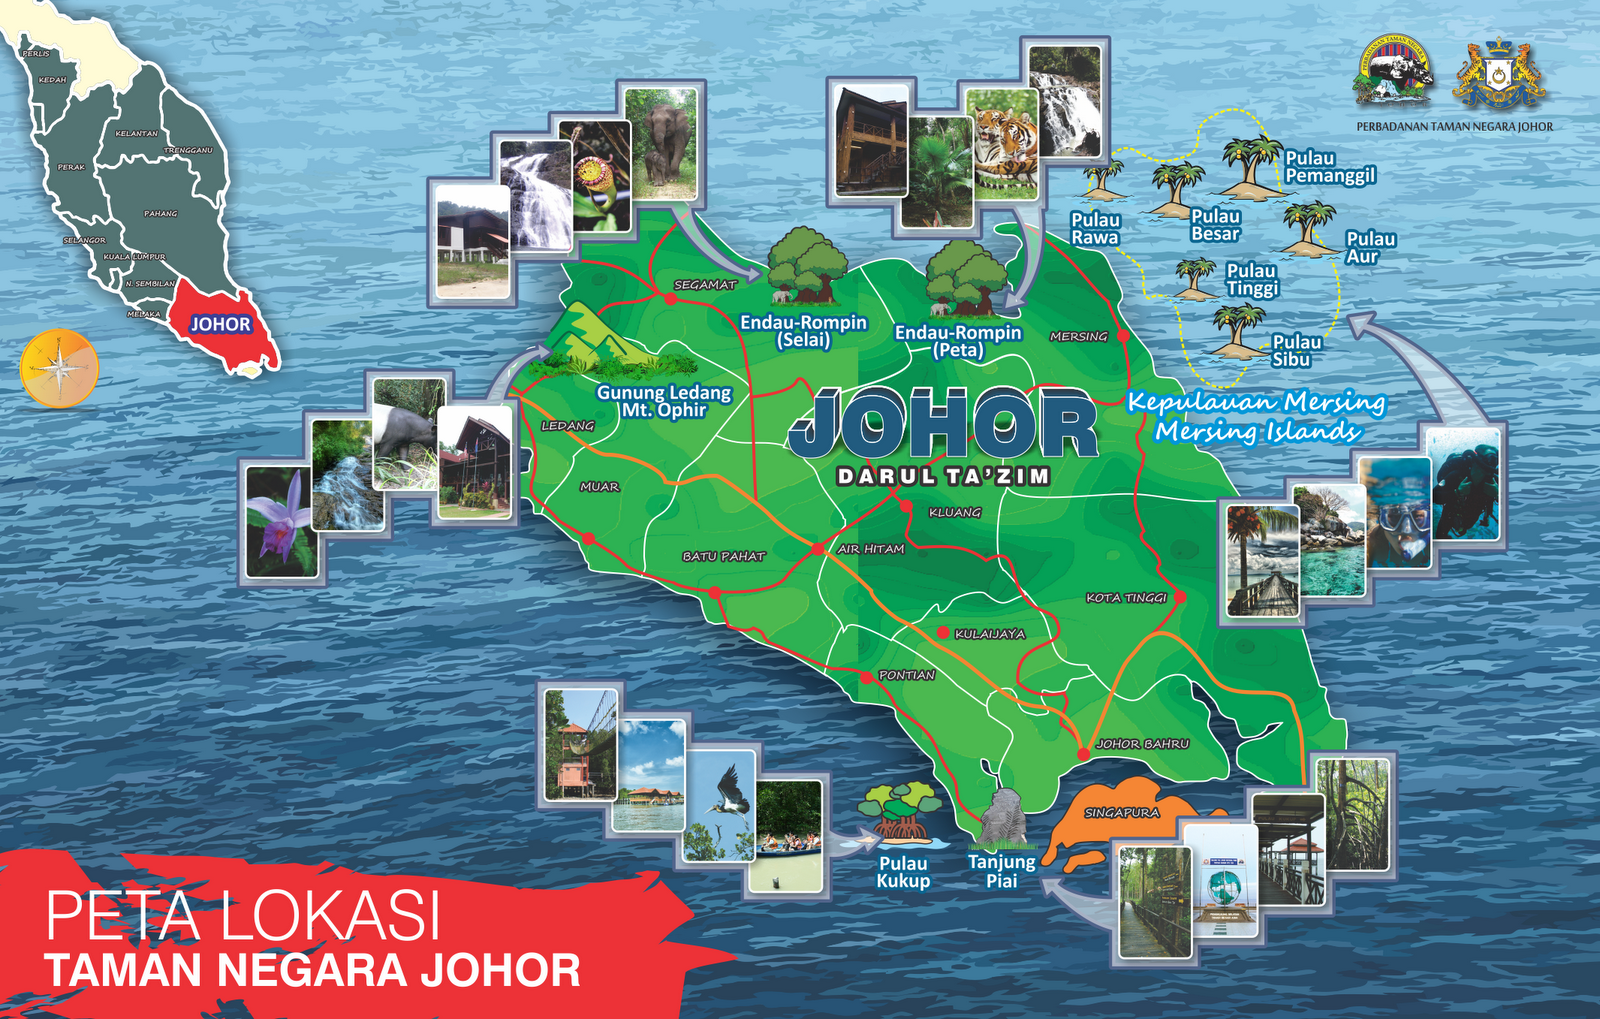 Johor National Parks: 05/14/12